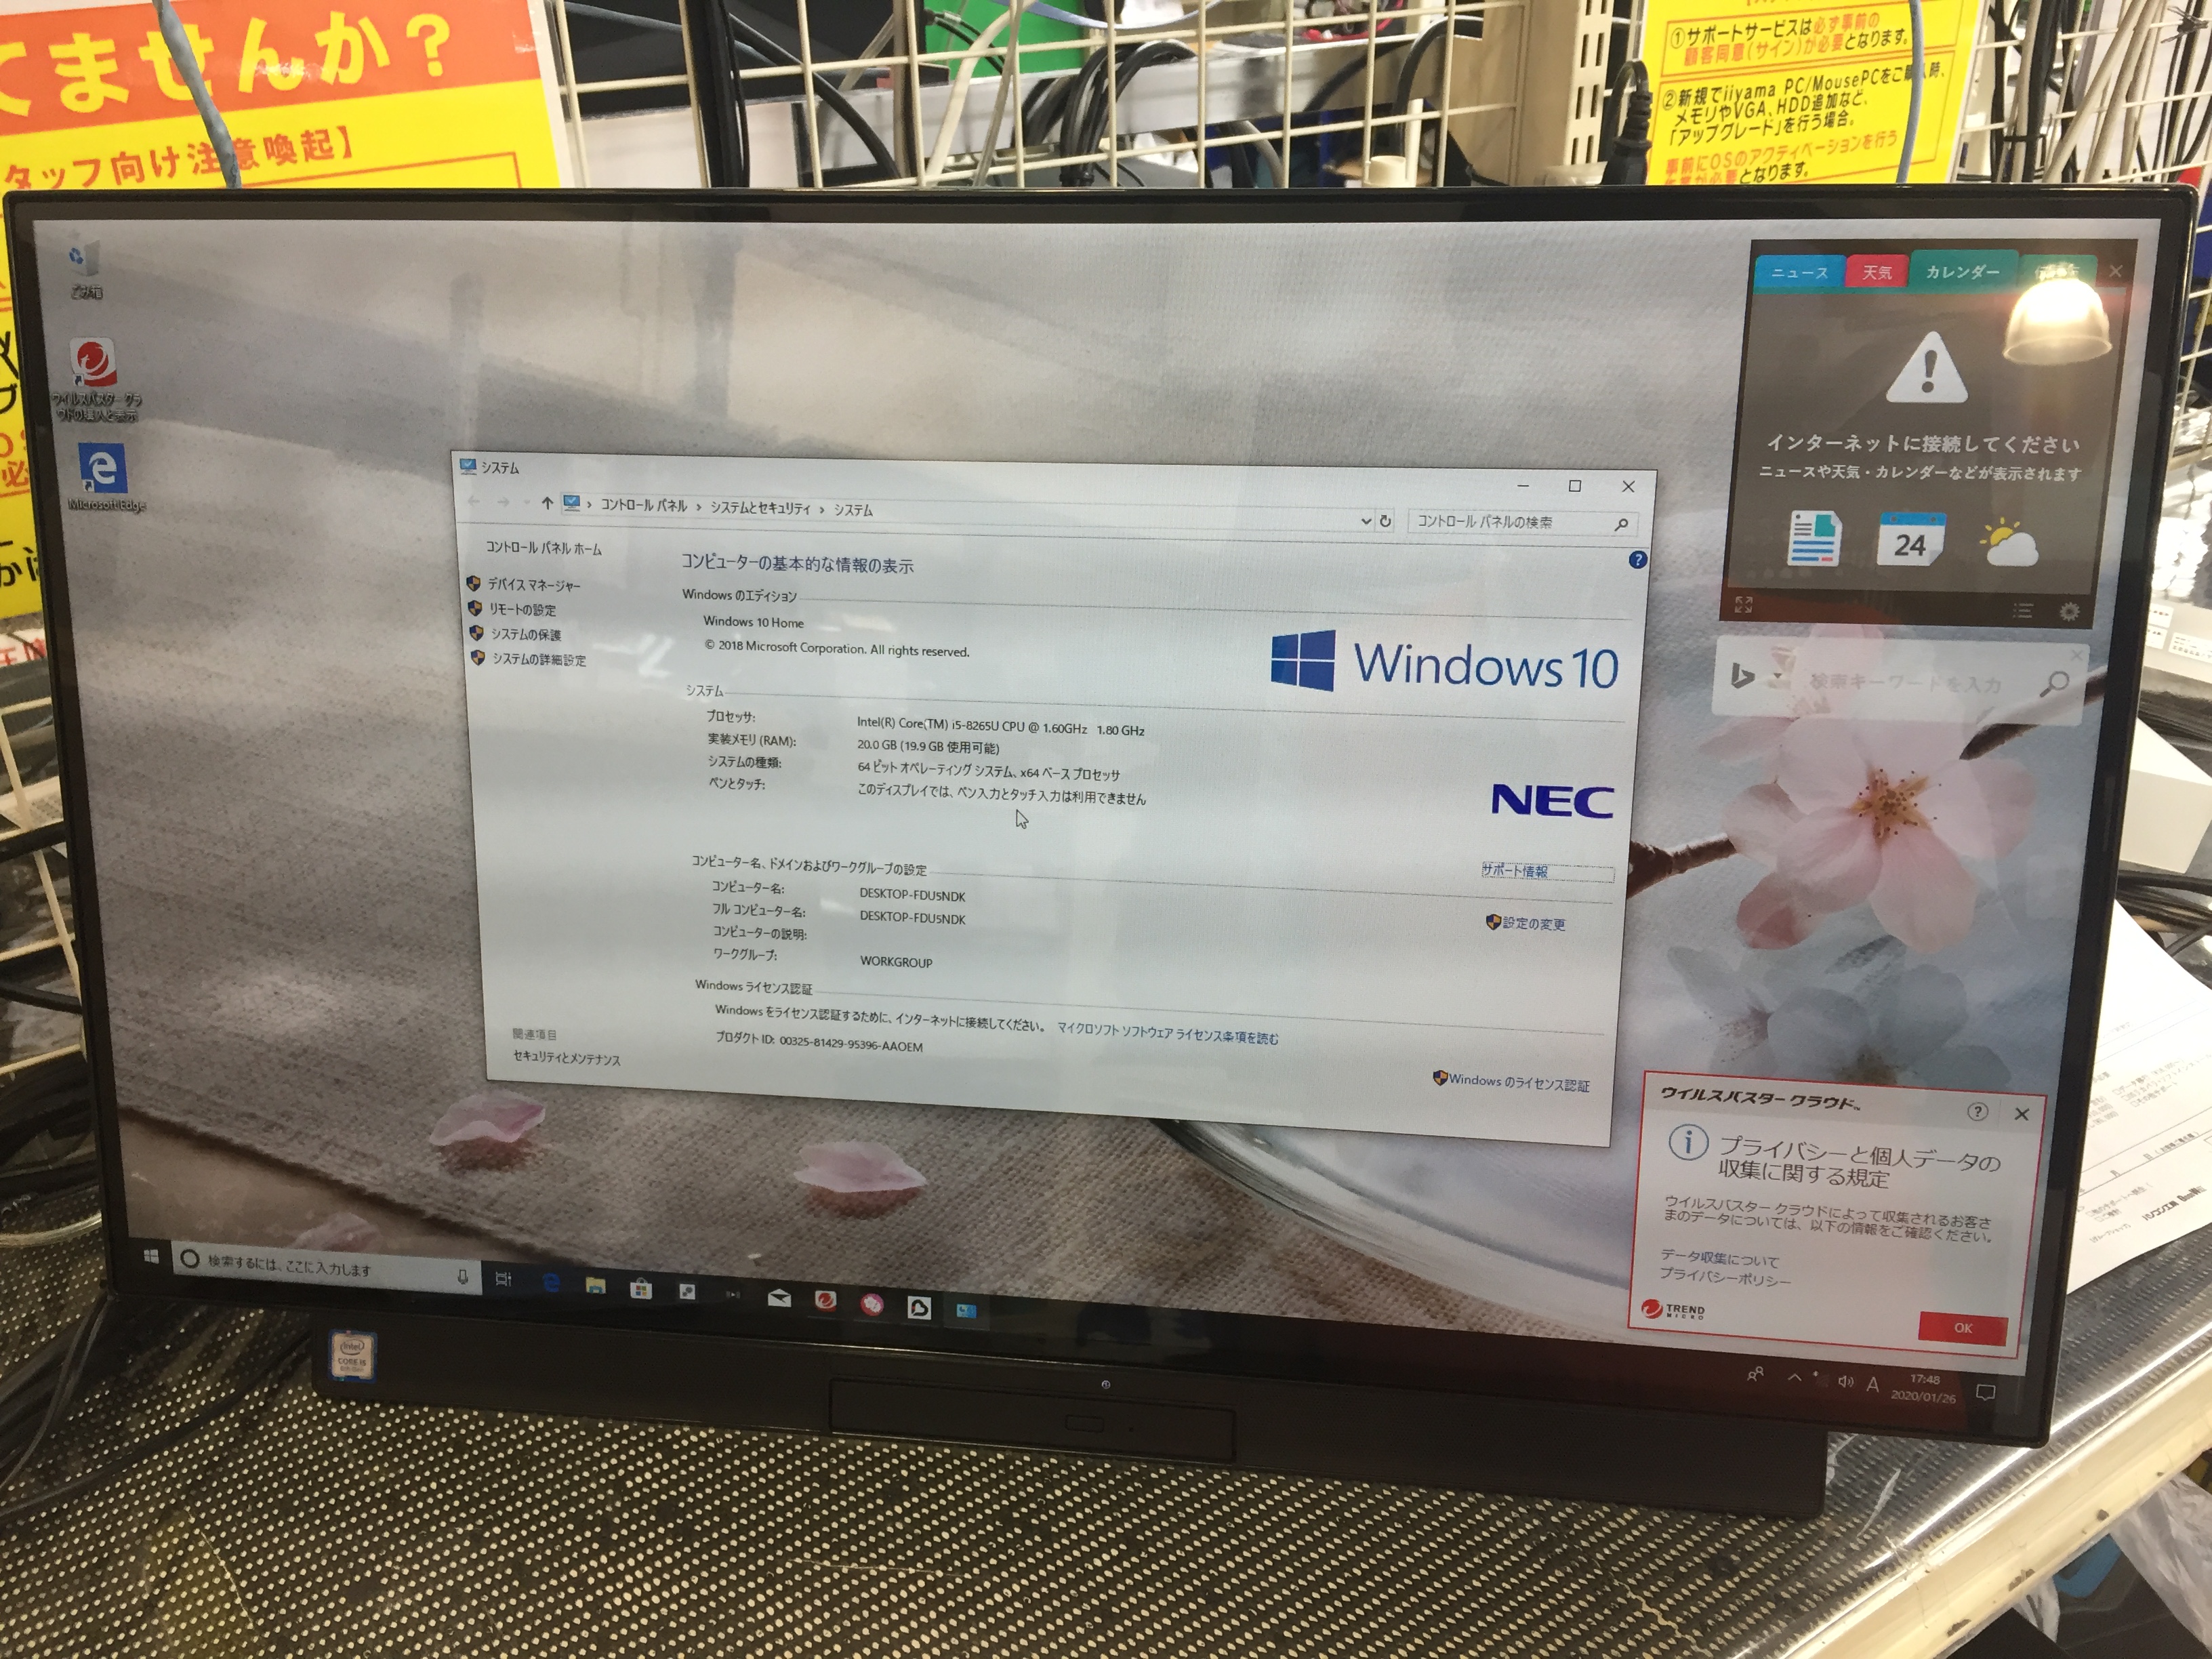 NEC LAVIE Desk All-in-one PC-DA500MAB-E3のメモリ増設サービス ...